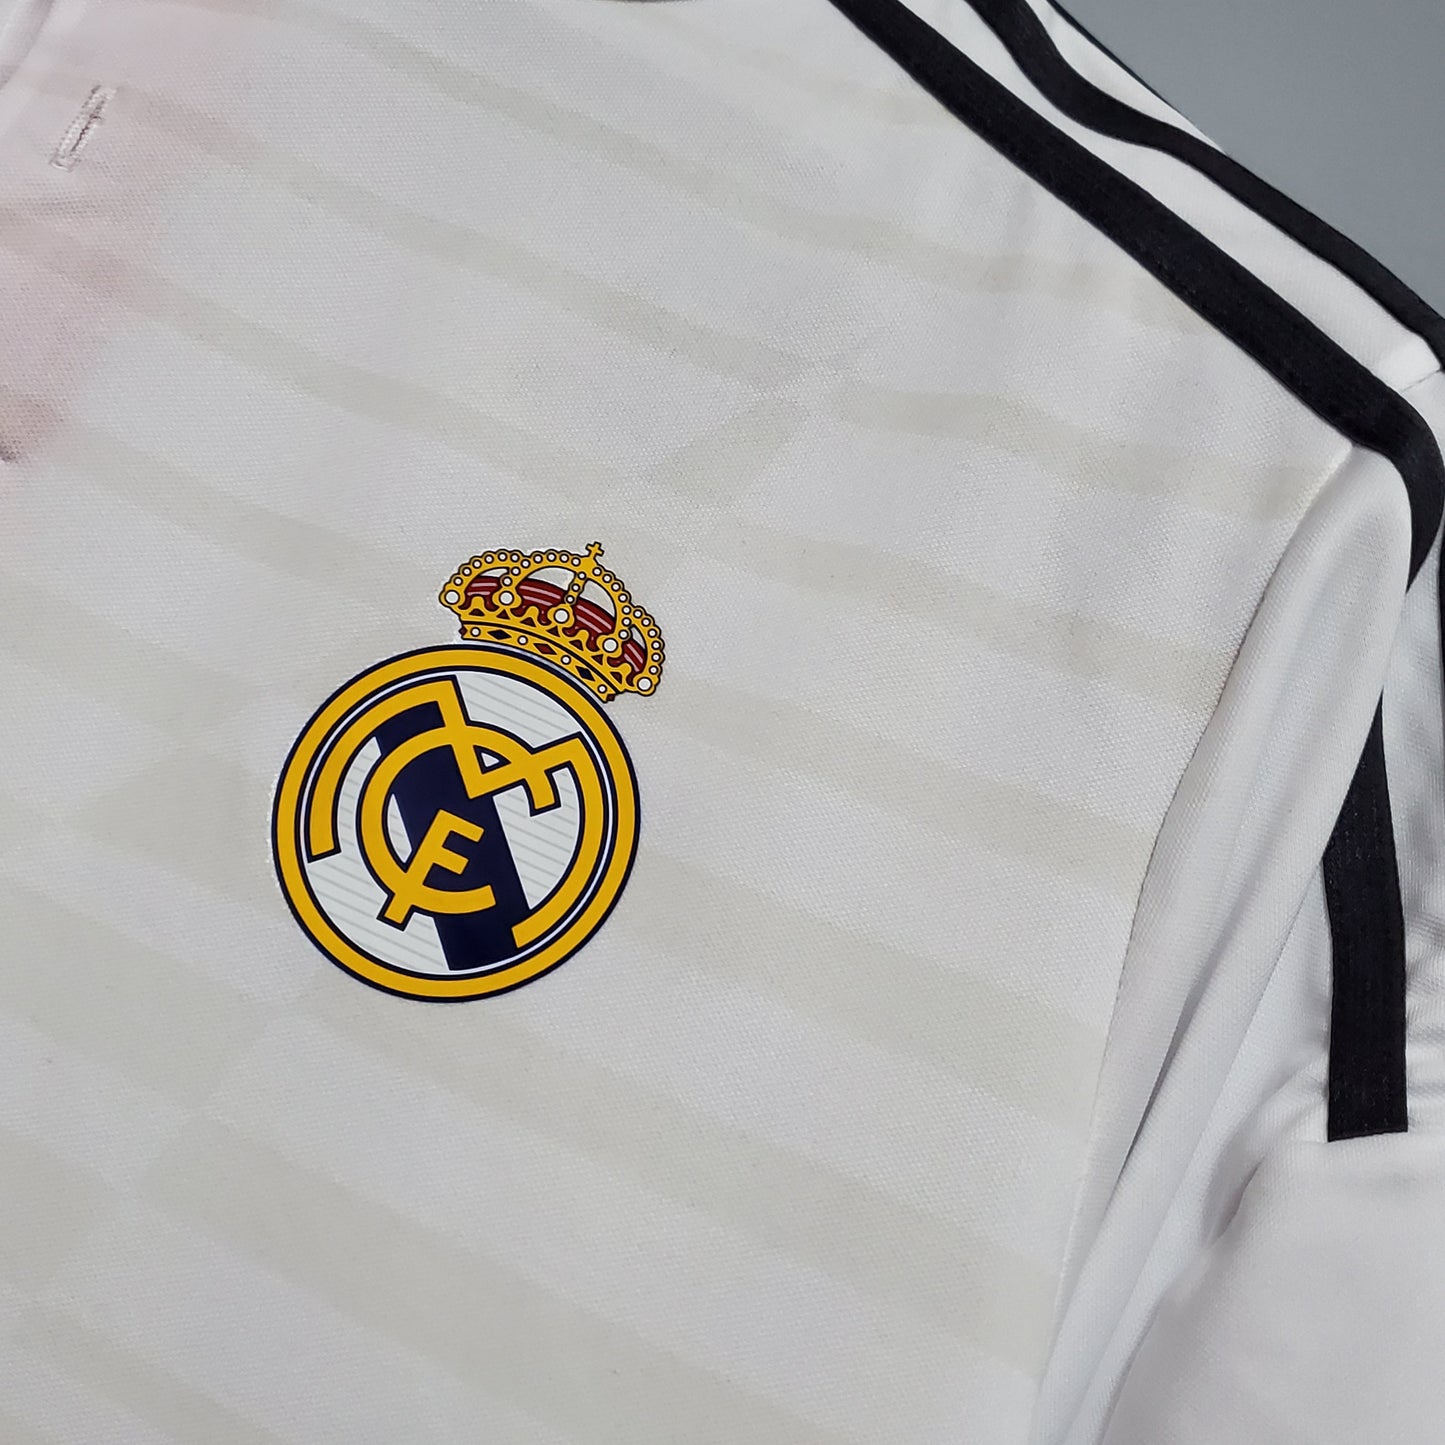 Camisa Retrô Real Madrid Home 2014/15